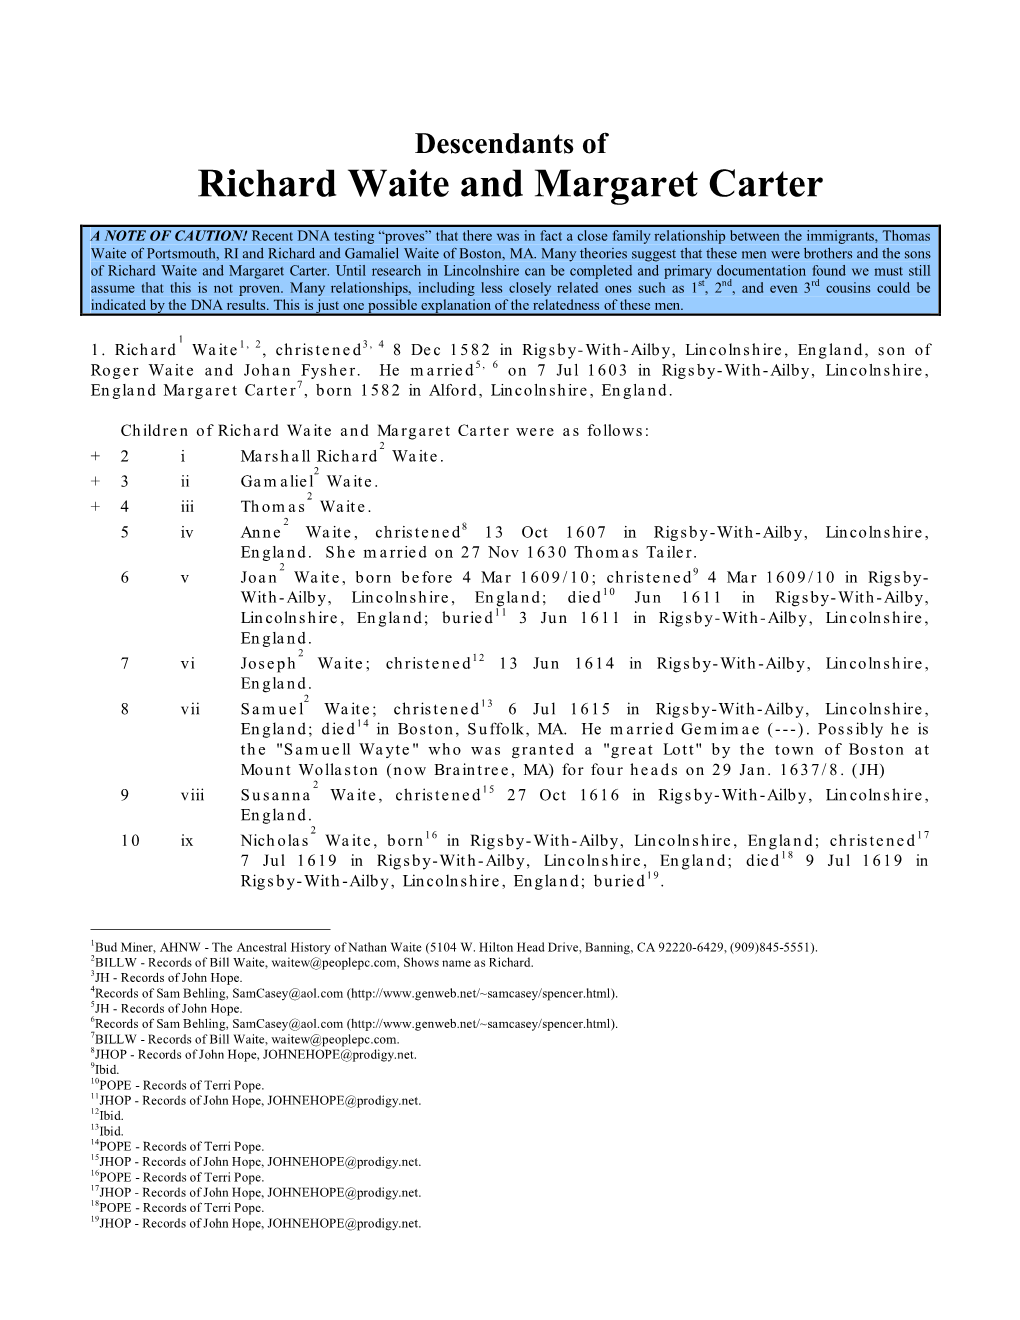 Richard Waite and Margaret Carter